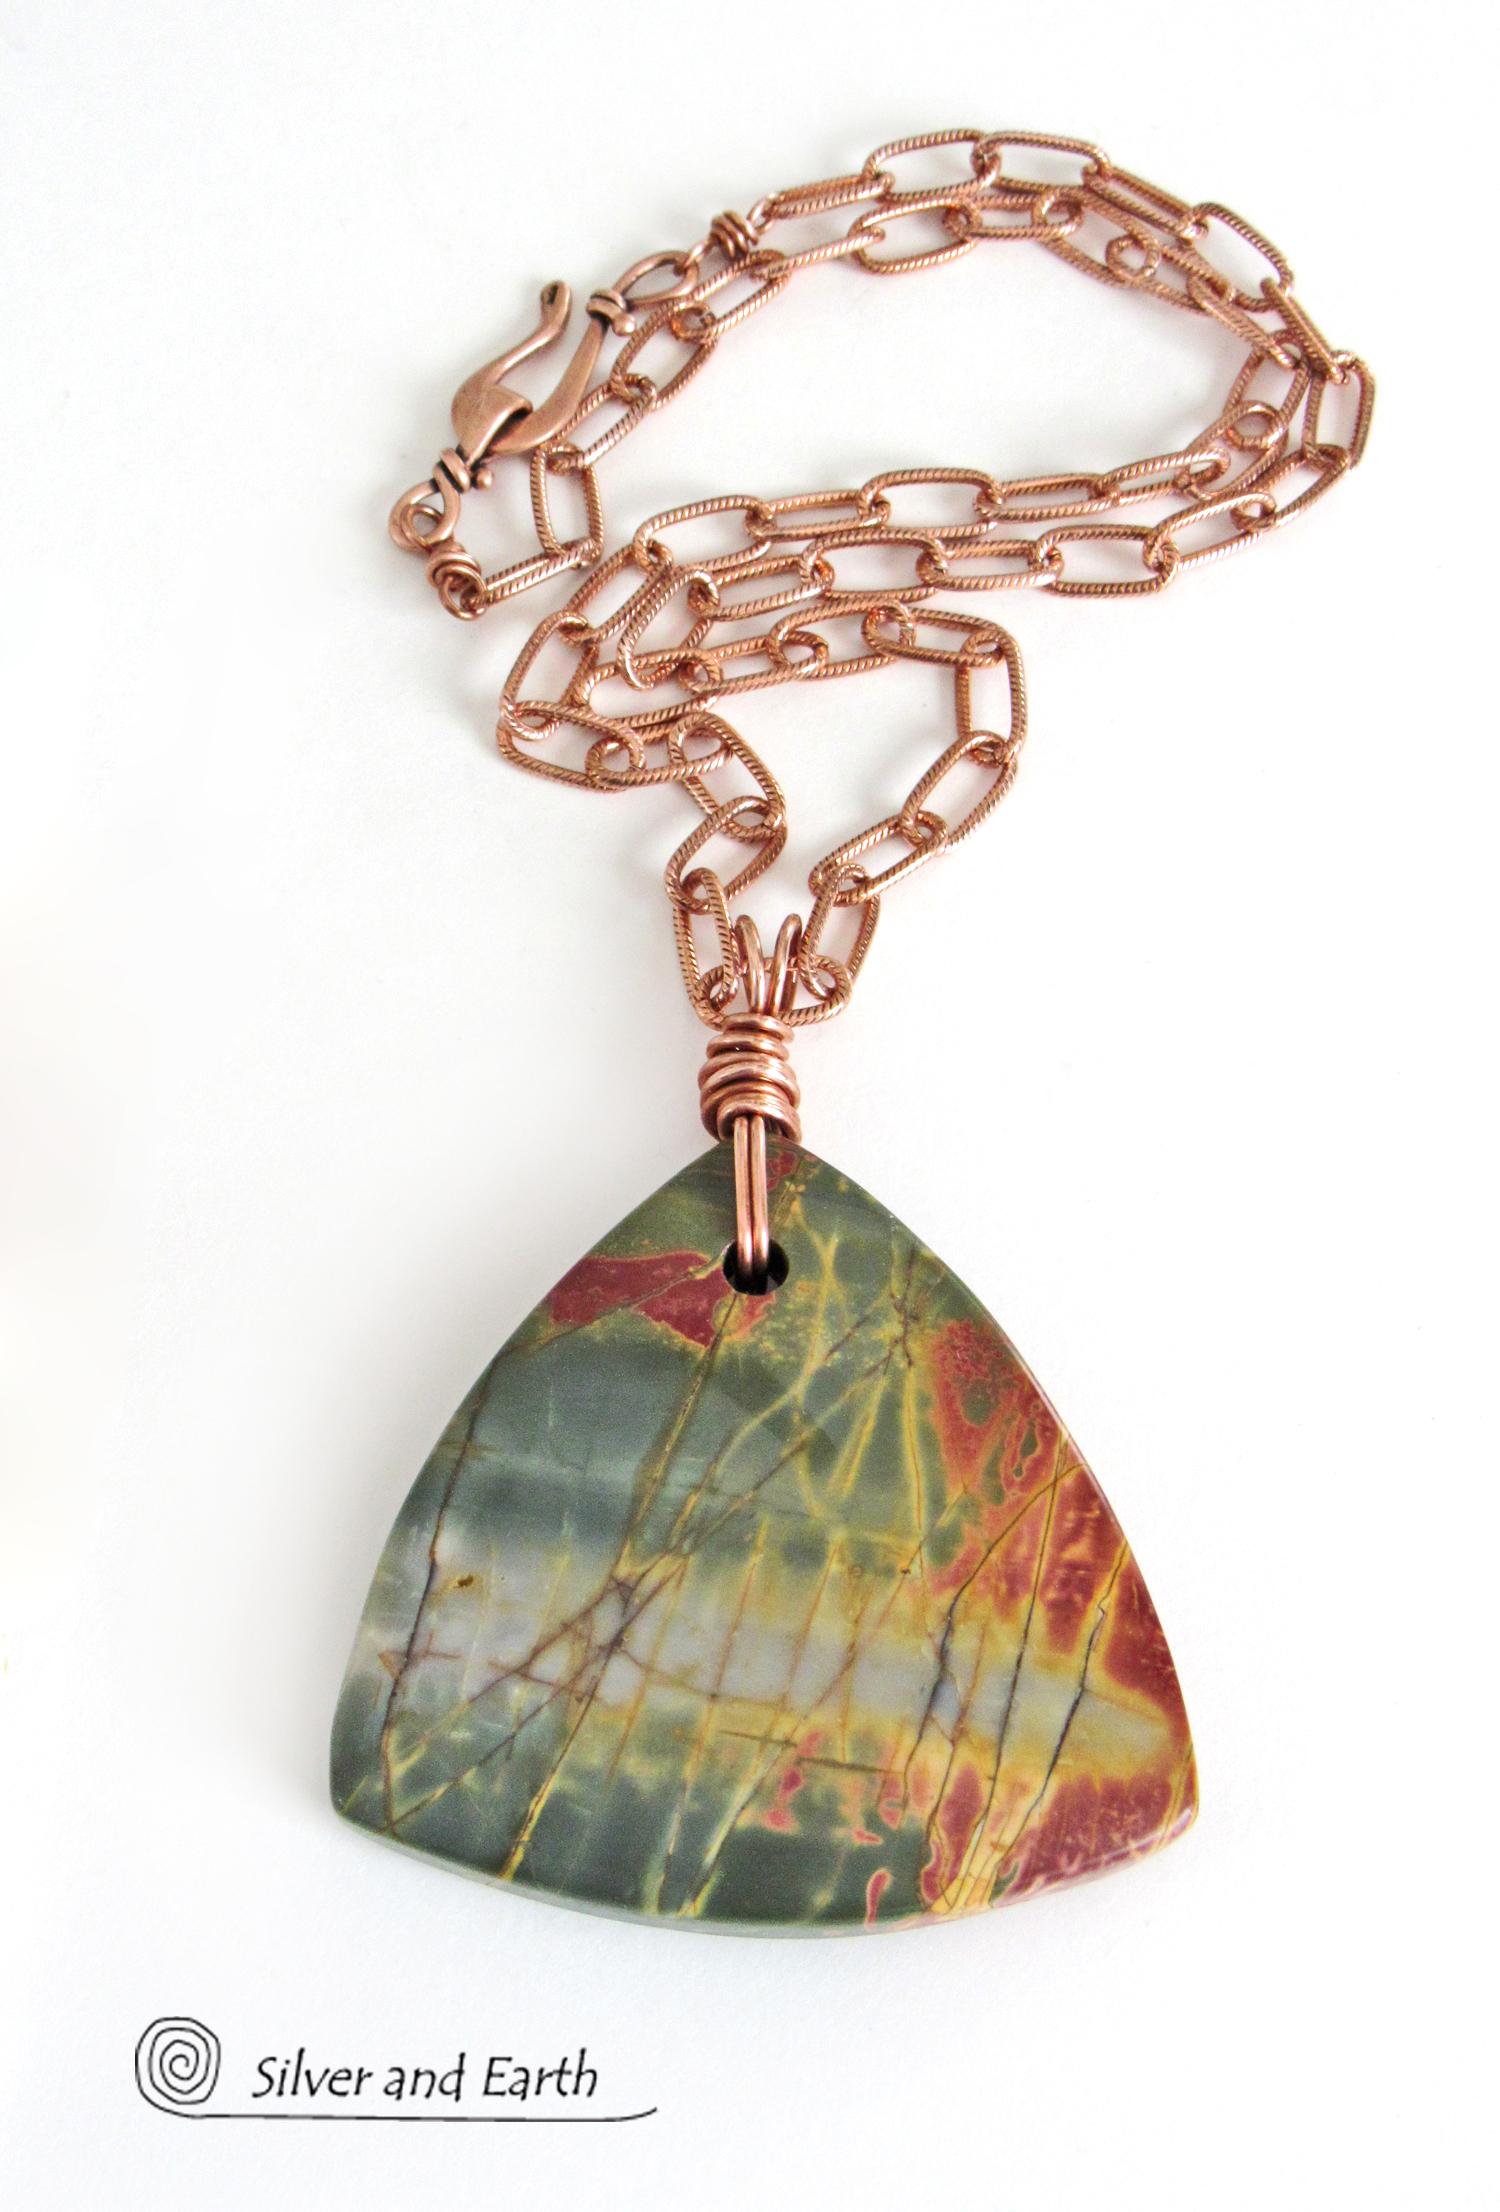 Red Creek Jasper Stone Pendant Necklace - Unisex Jewelry for Men or Women